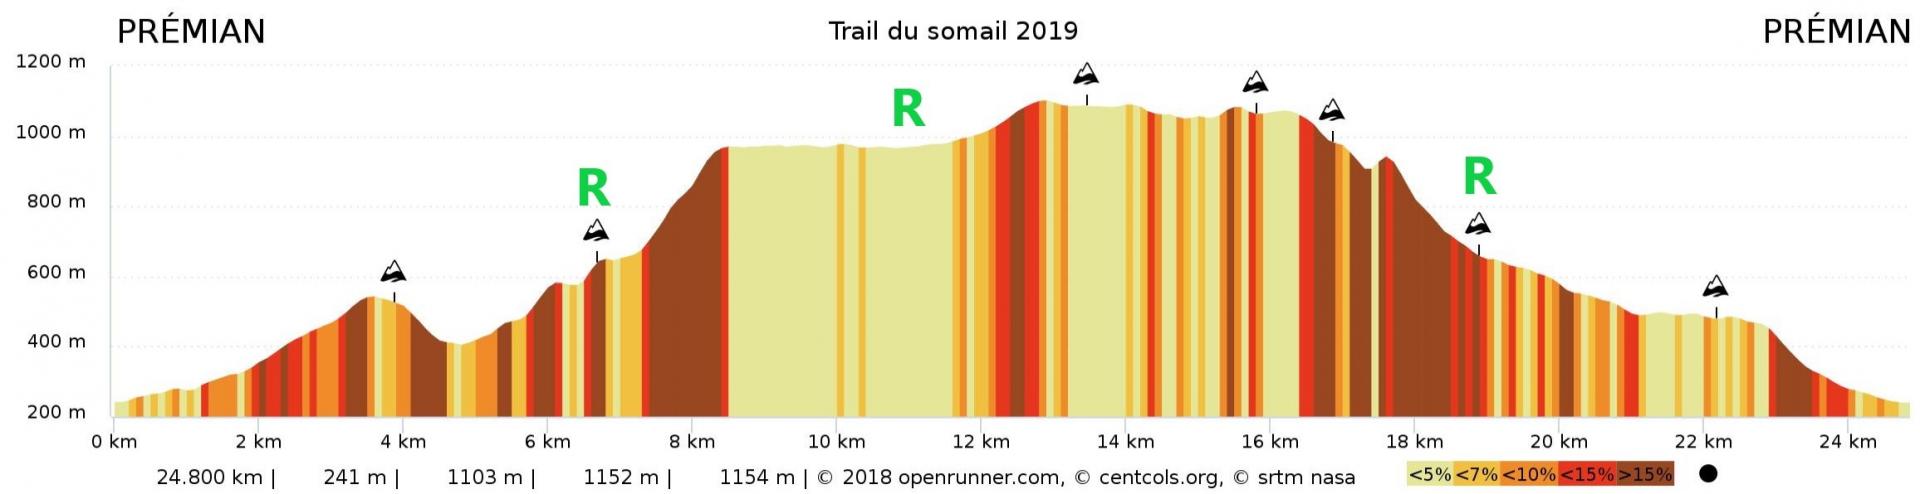 Profil trail du somail 2019